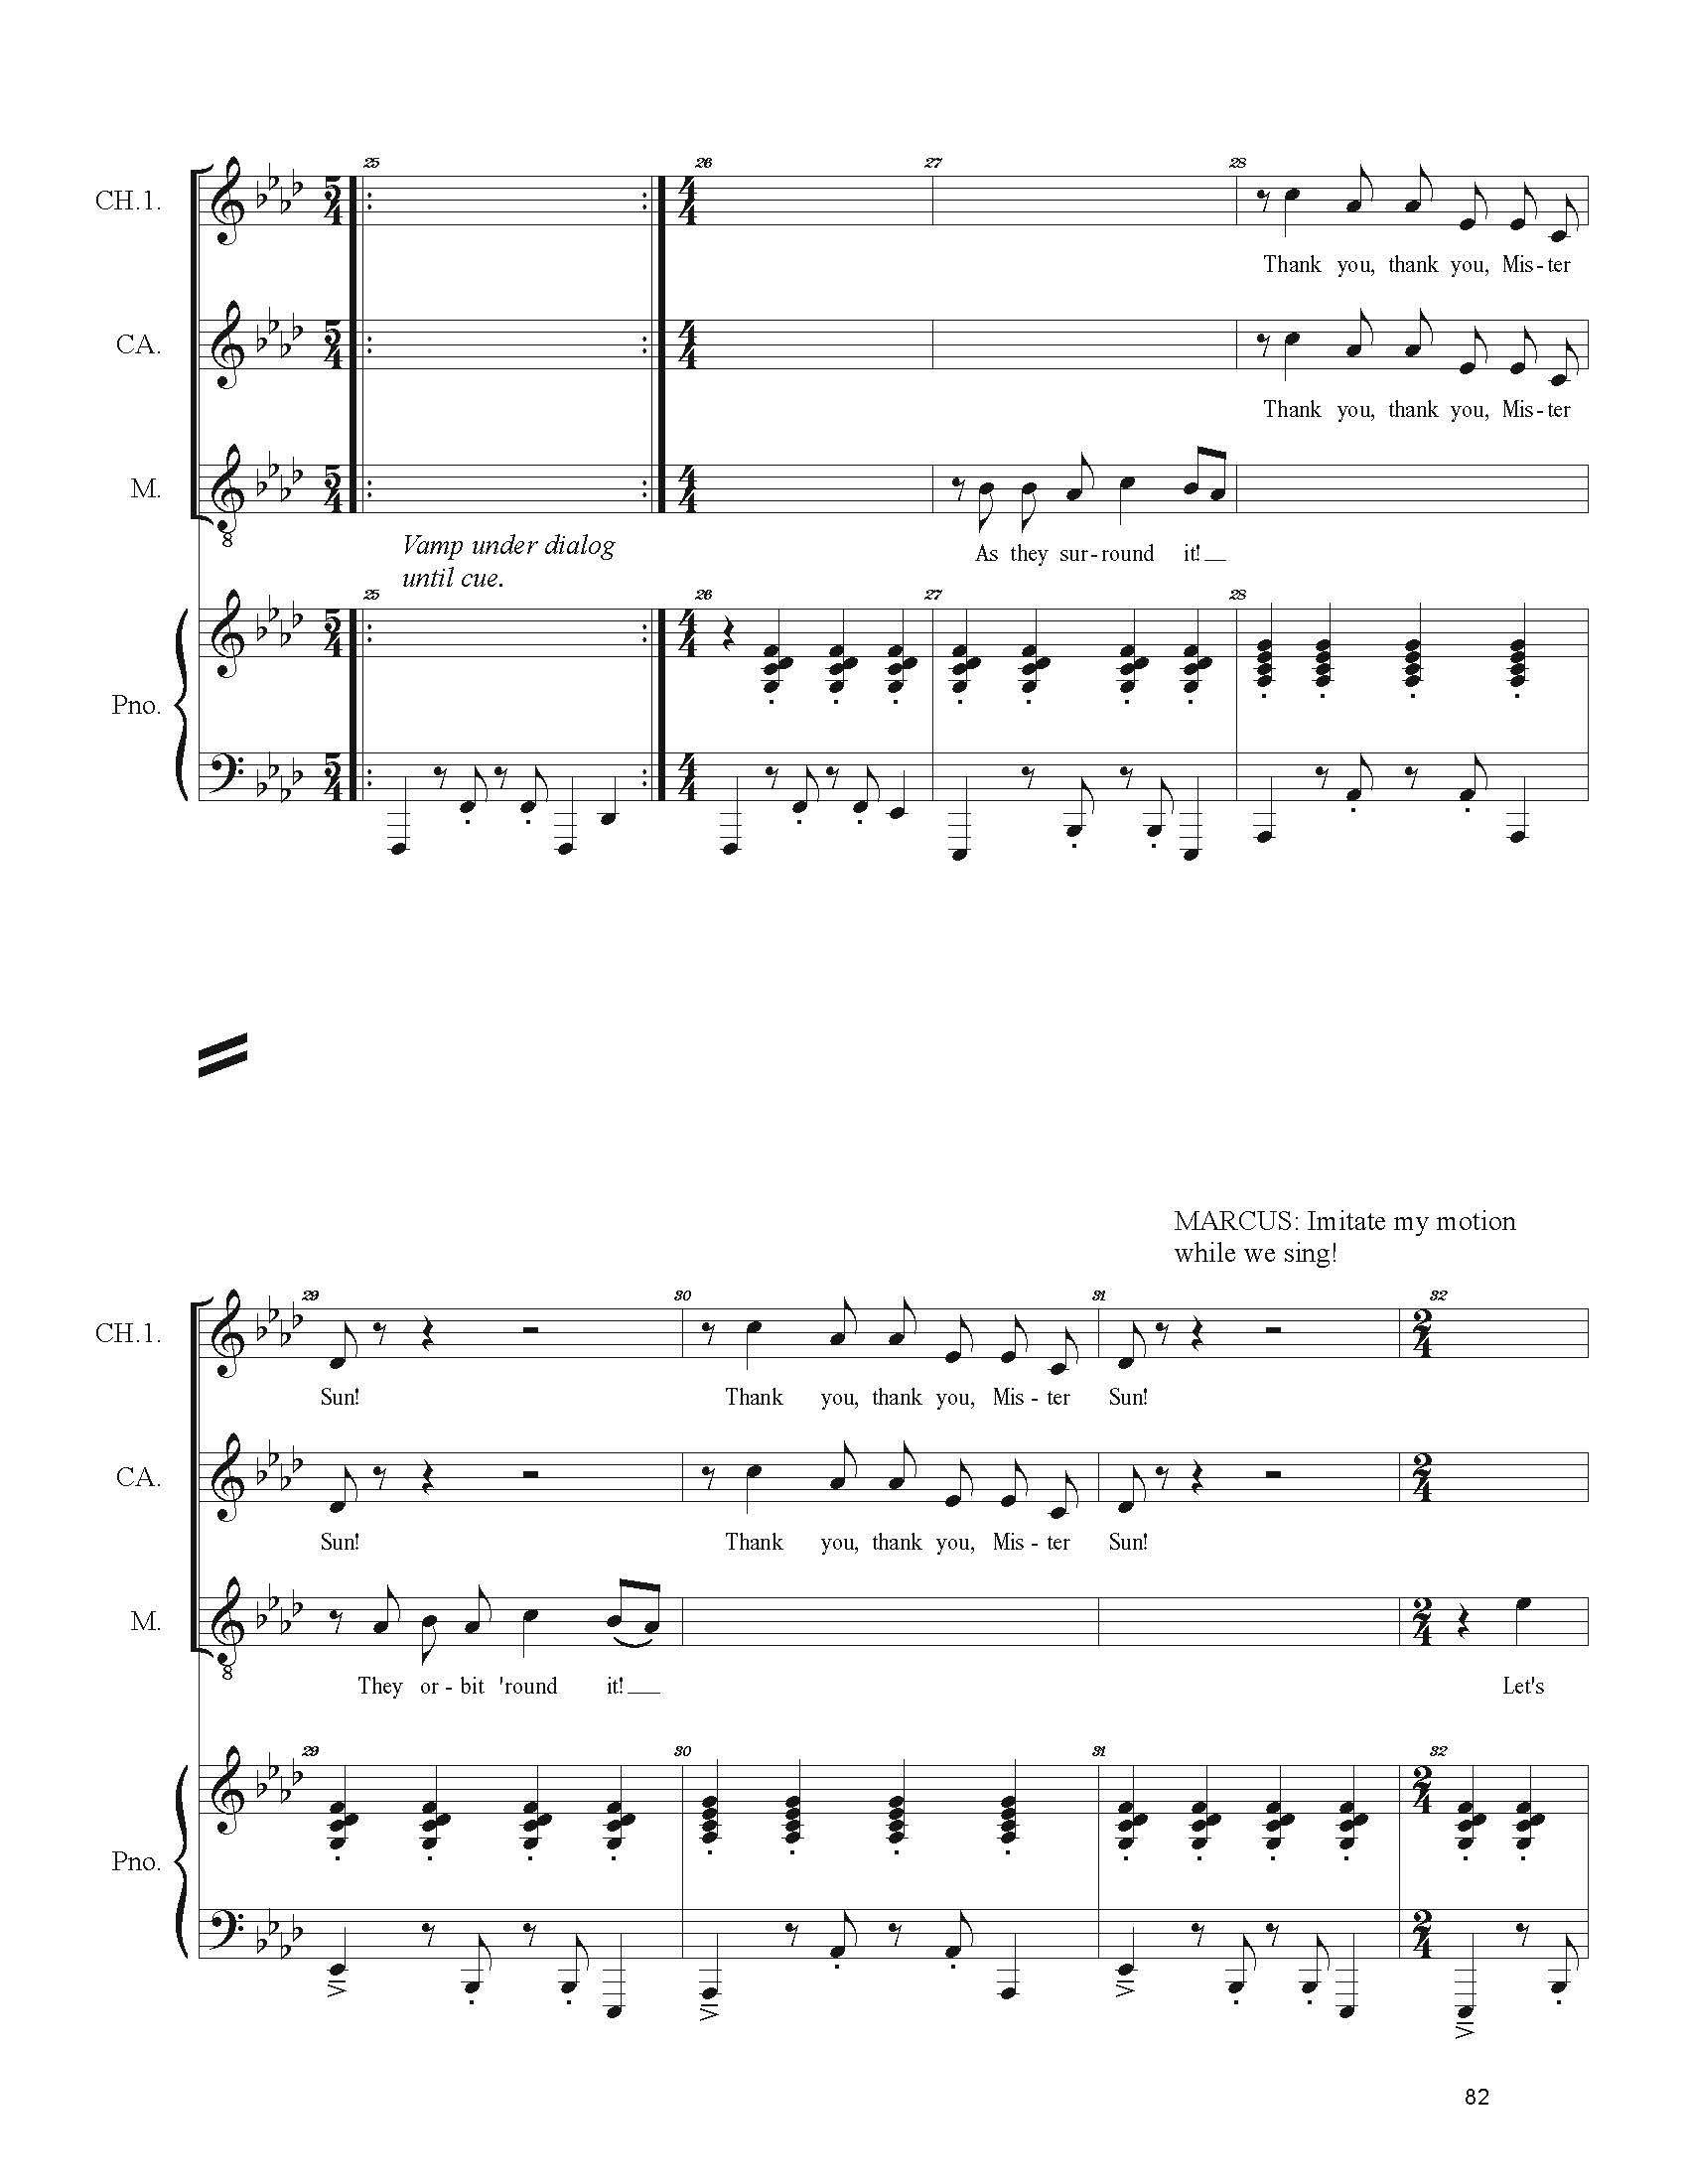 FULL PIANO VOCAL SCORE DRAFT 1 - Score_Page_082.jpg